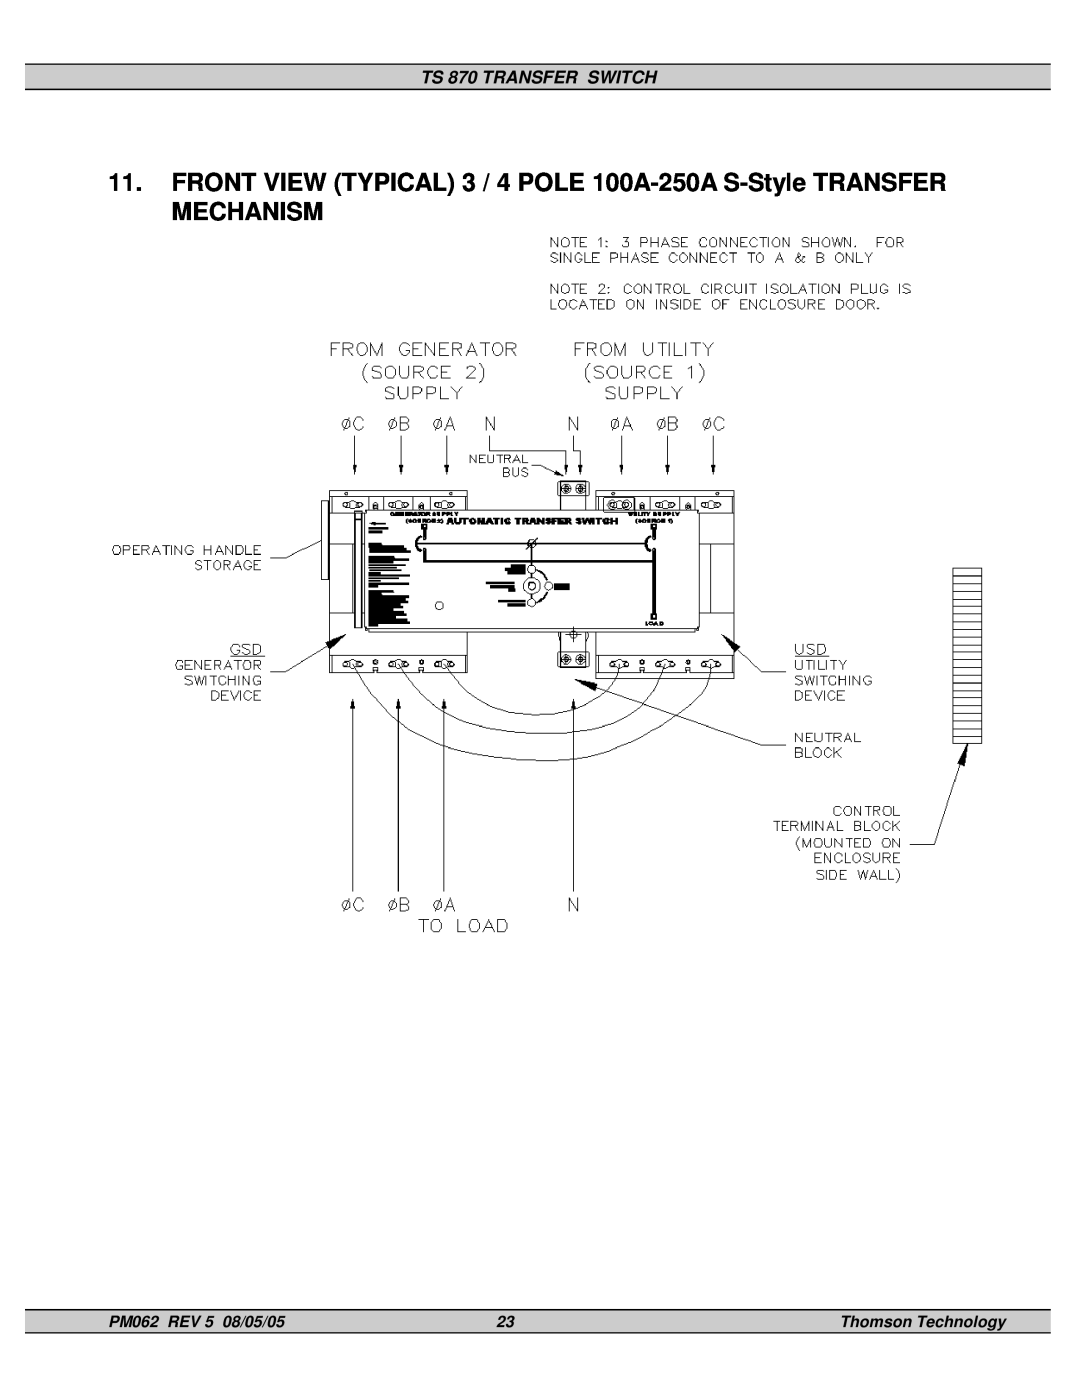 Technicolor - Thomson service manual TS 870 TRANSFER SWITCH, PM062 REV 5 08/05/05, Thomson Technology 